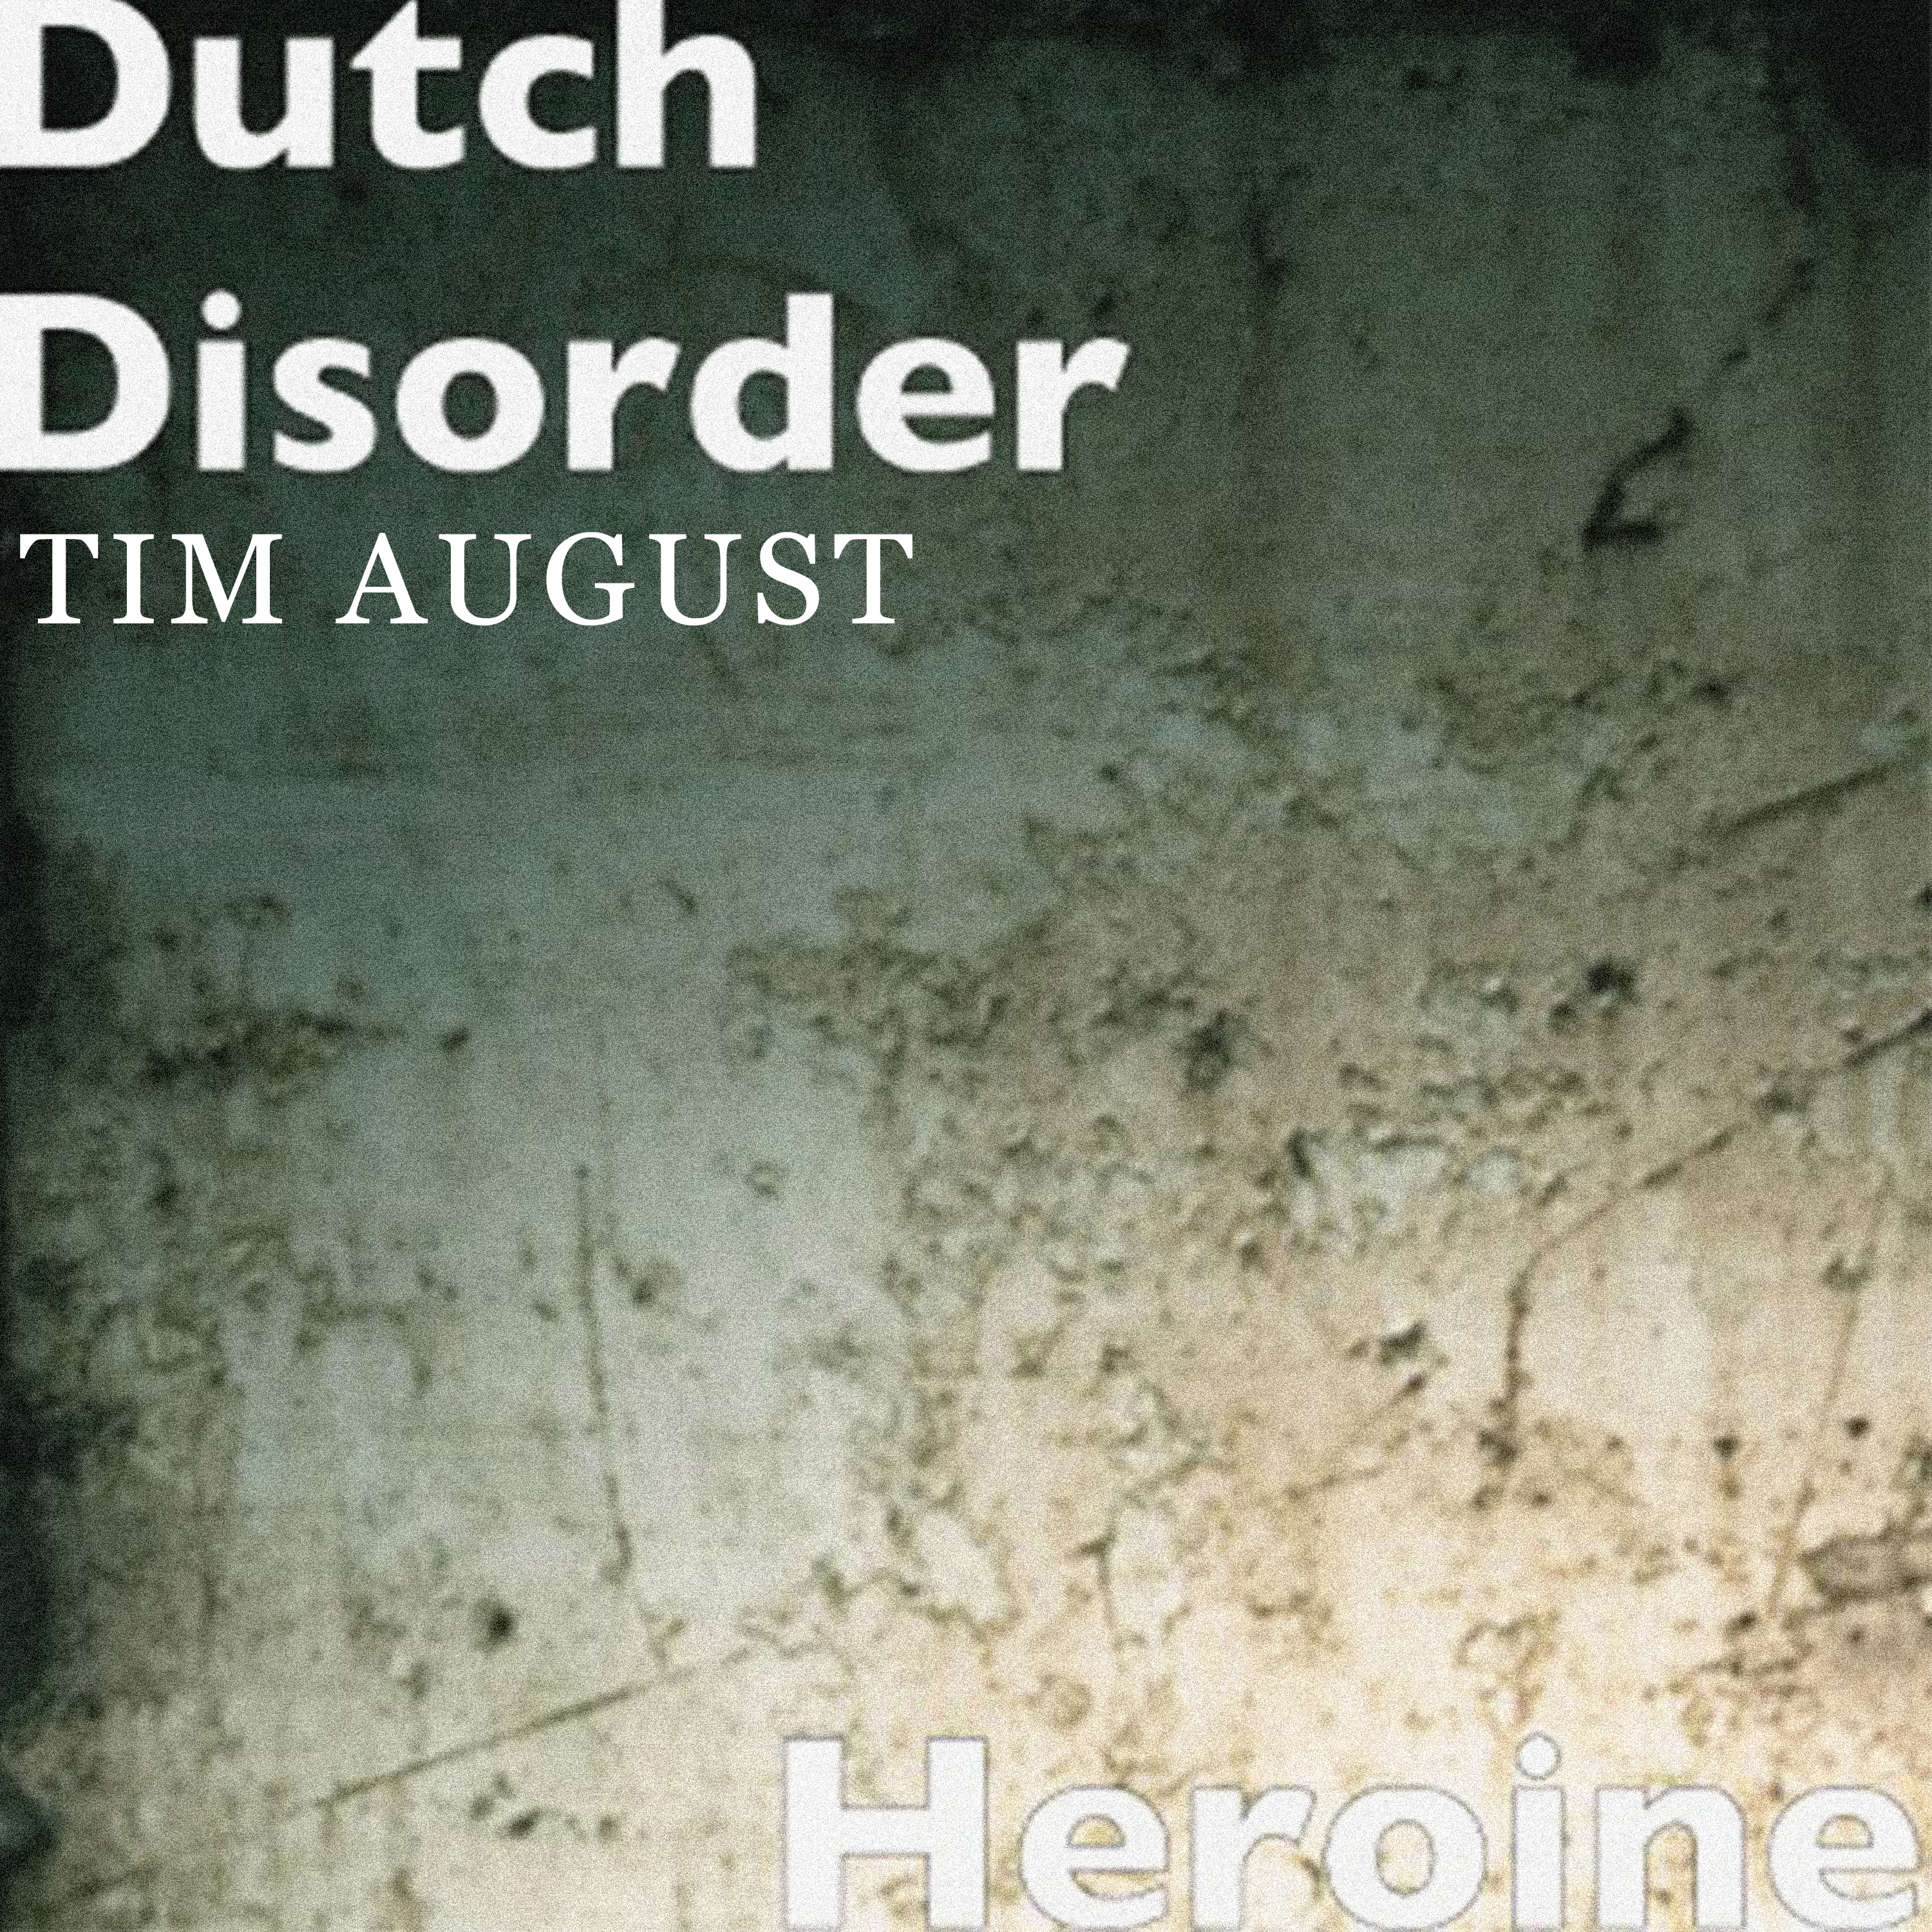 I dont Love. Нано Project. Проект соль обложка альбома. I dont Love you poster. Dutch disorder heroine pat b